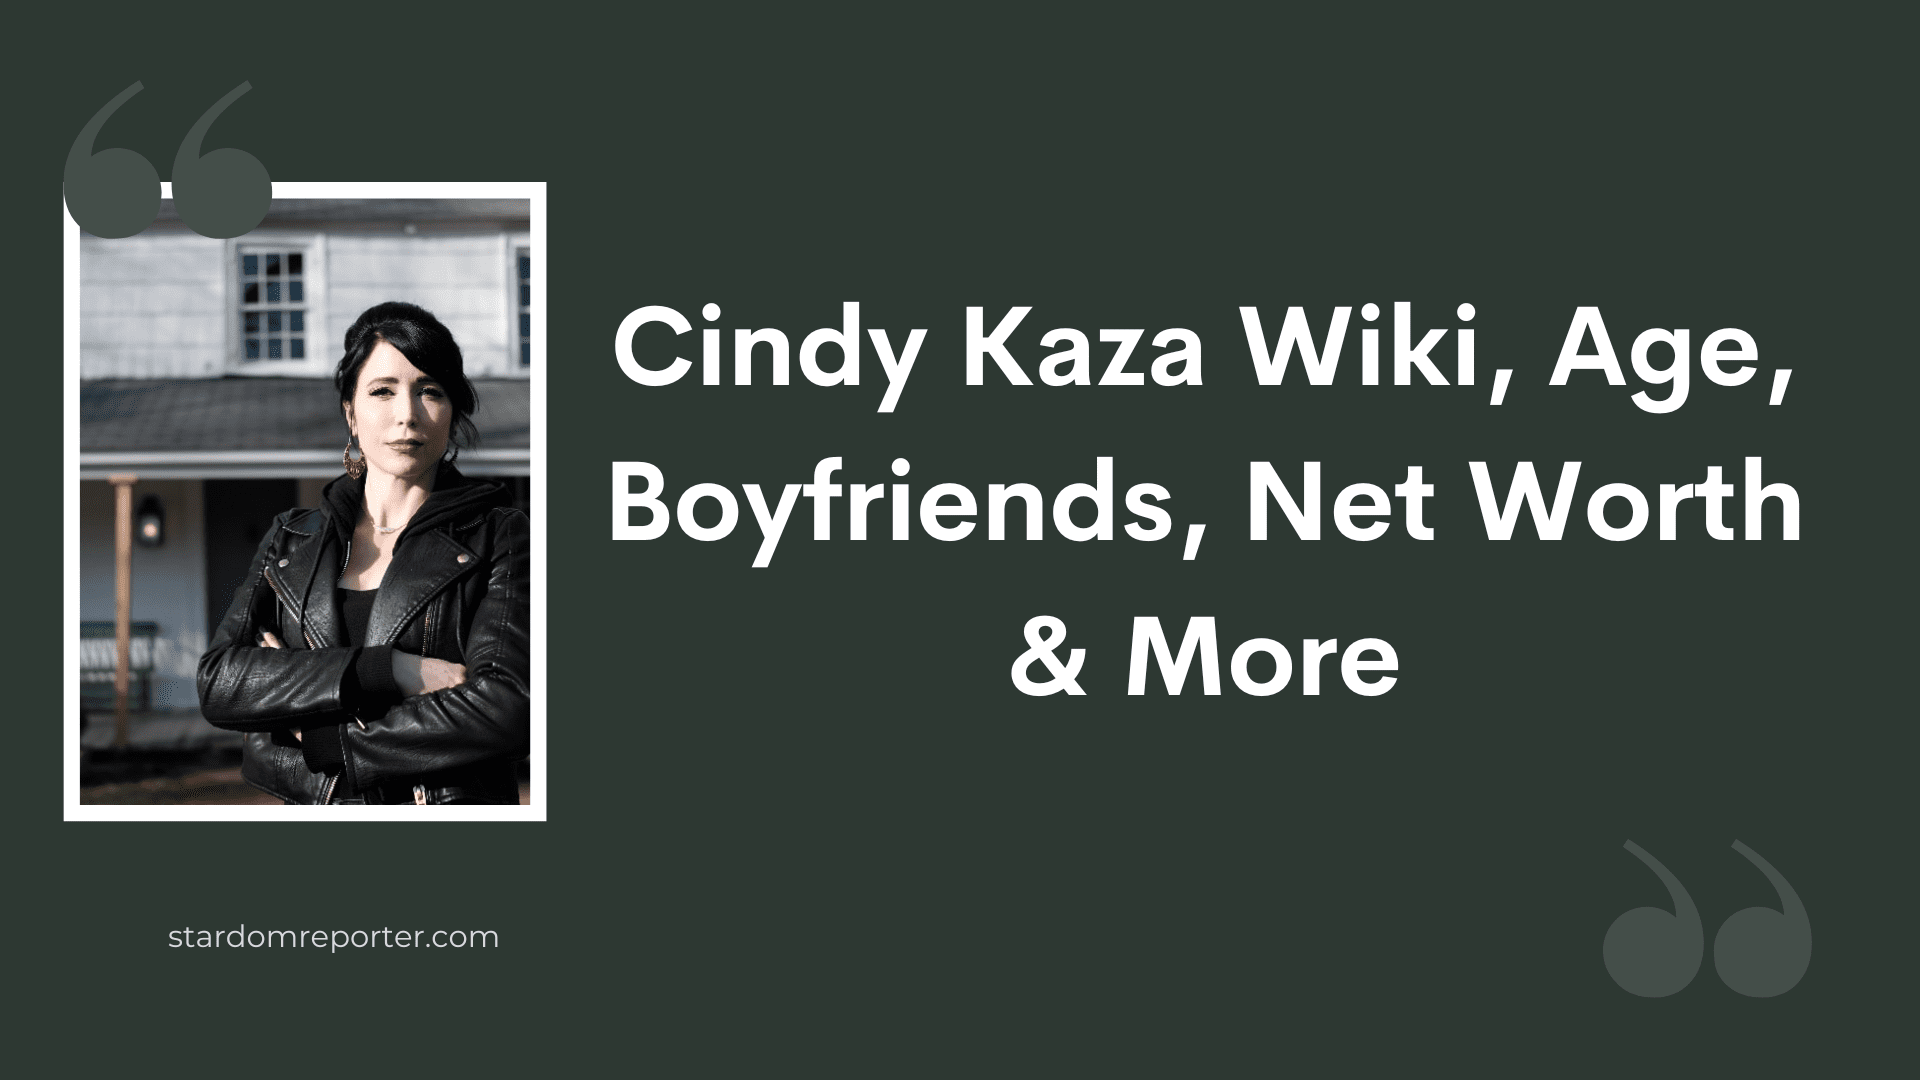 Cindy Kaza Wiki, Age, Bio, Boyfriends, Net Worth & More - 27